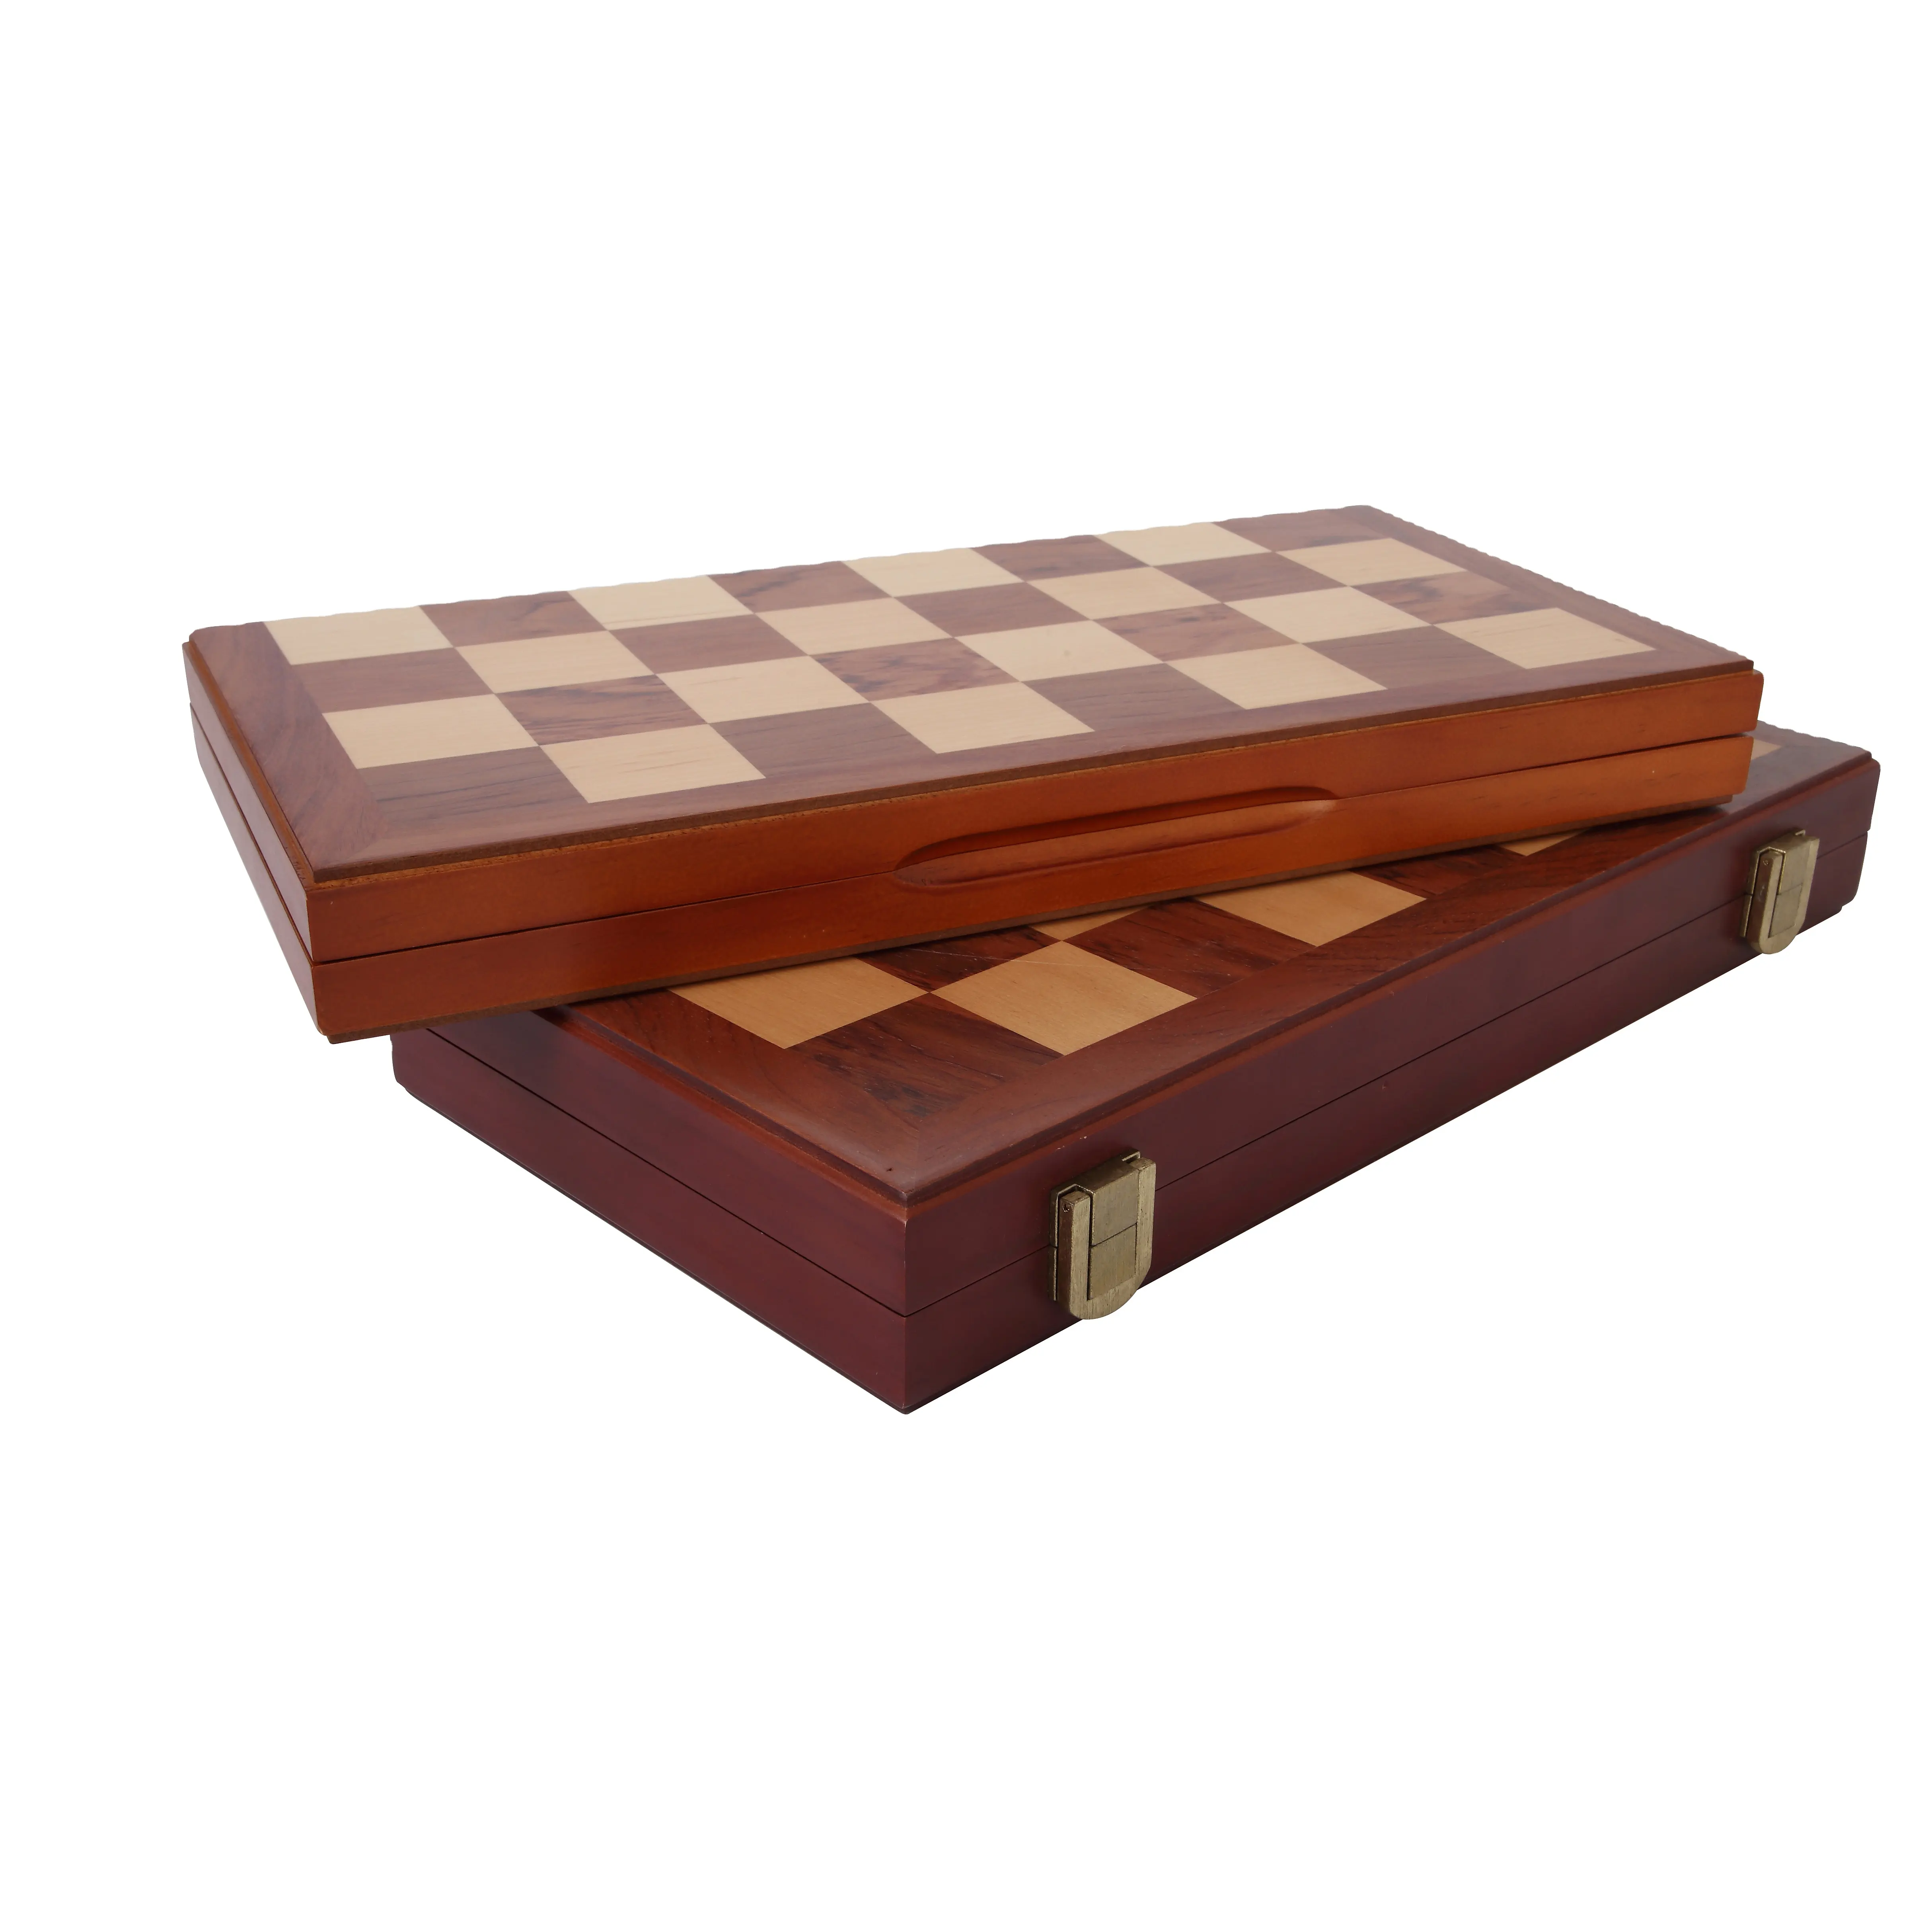 Retro ahşap satranç popüler satranç oyunu kutusu tavla dama kurulu seti çevre dostu satranç taşları